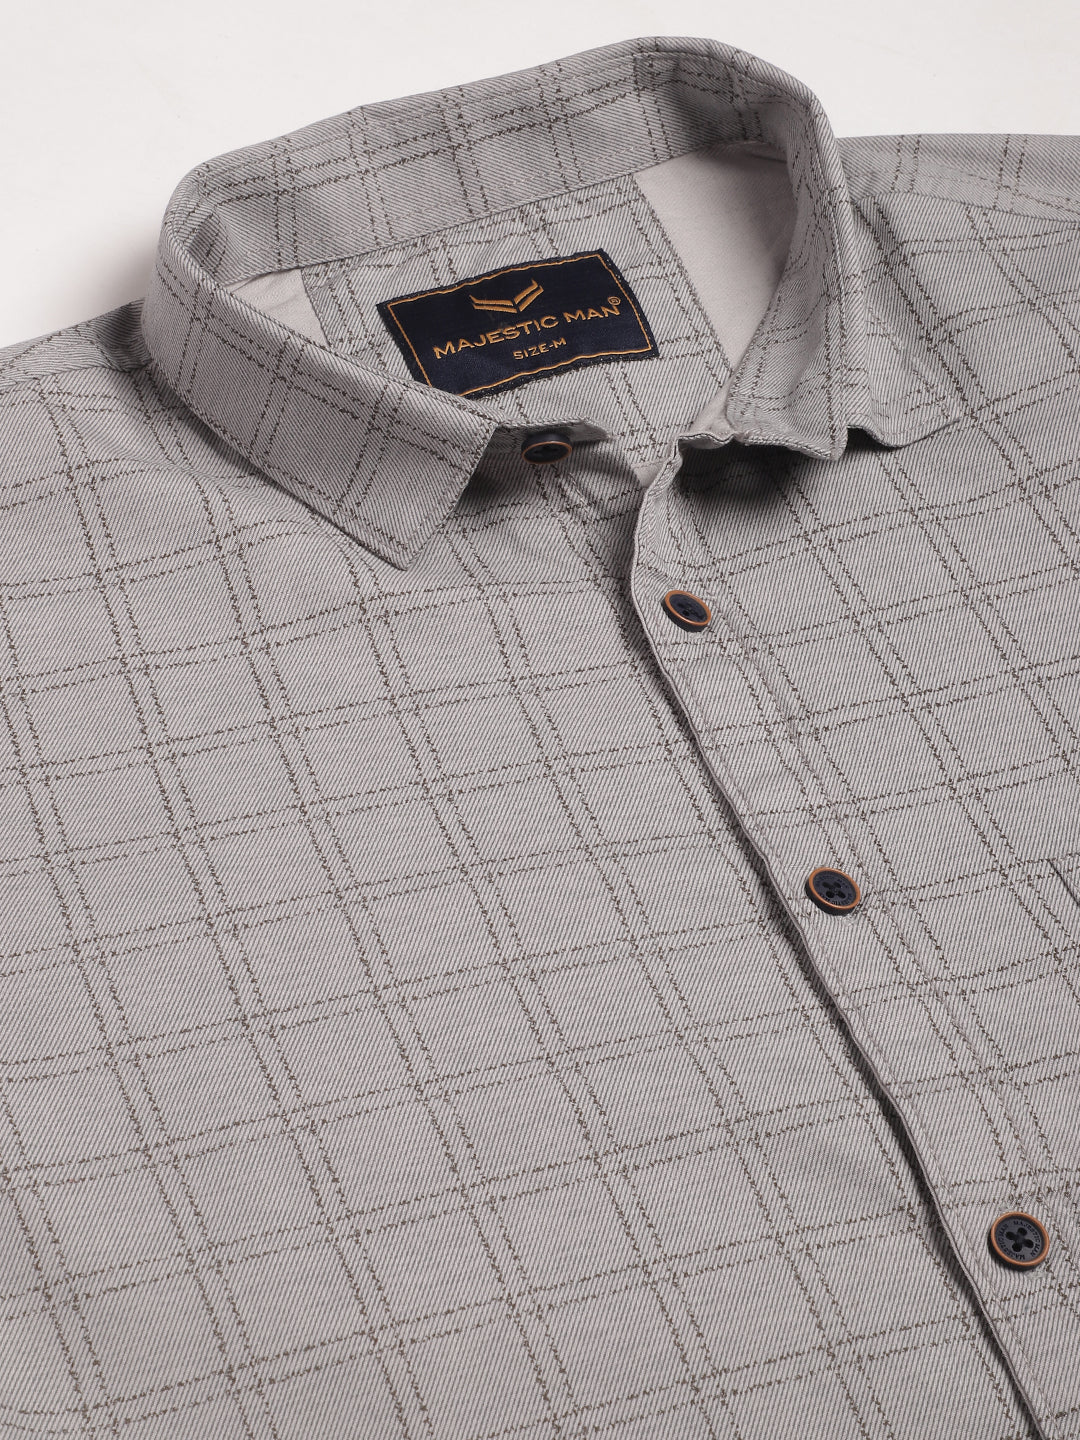 Classy Pure Cotton Checkered Shirt - Grey